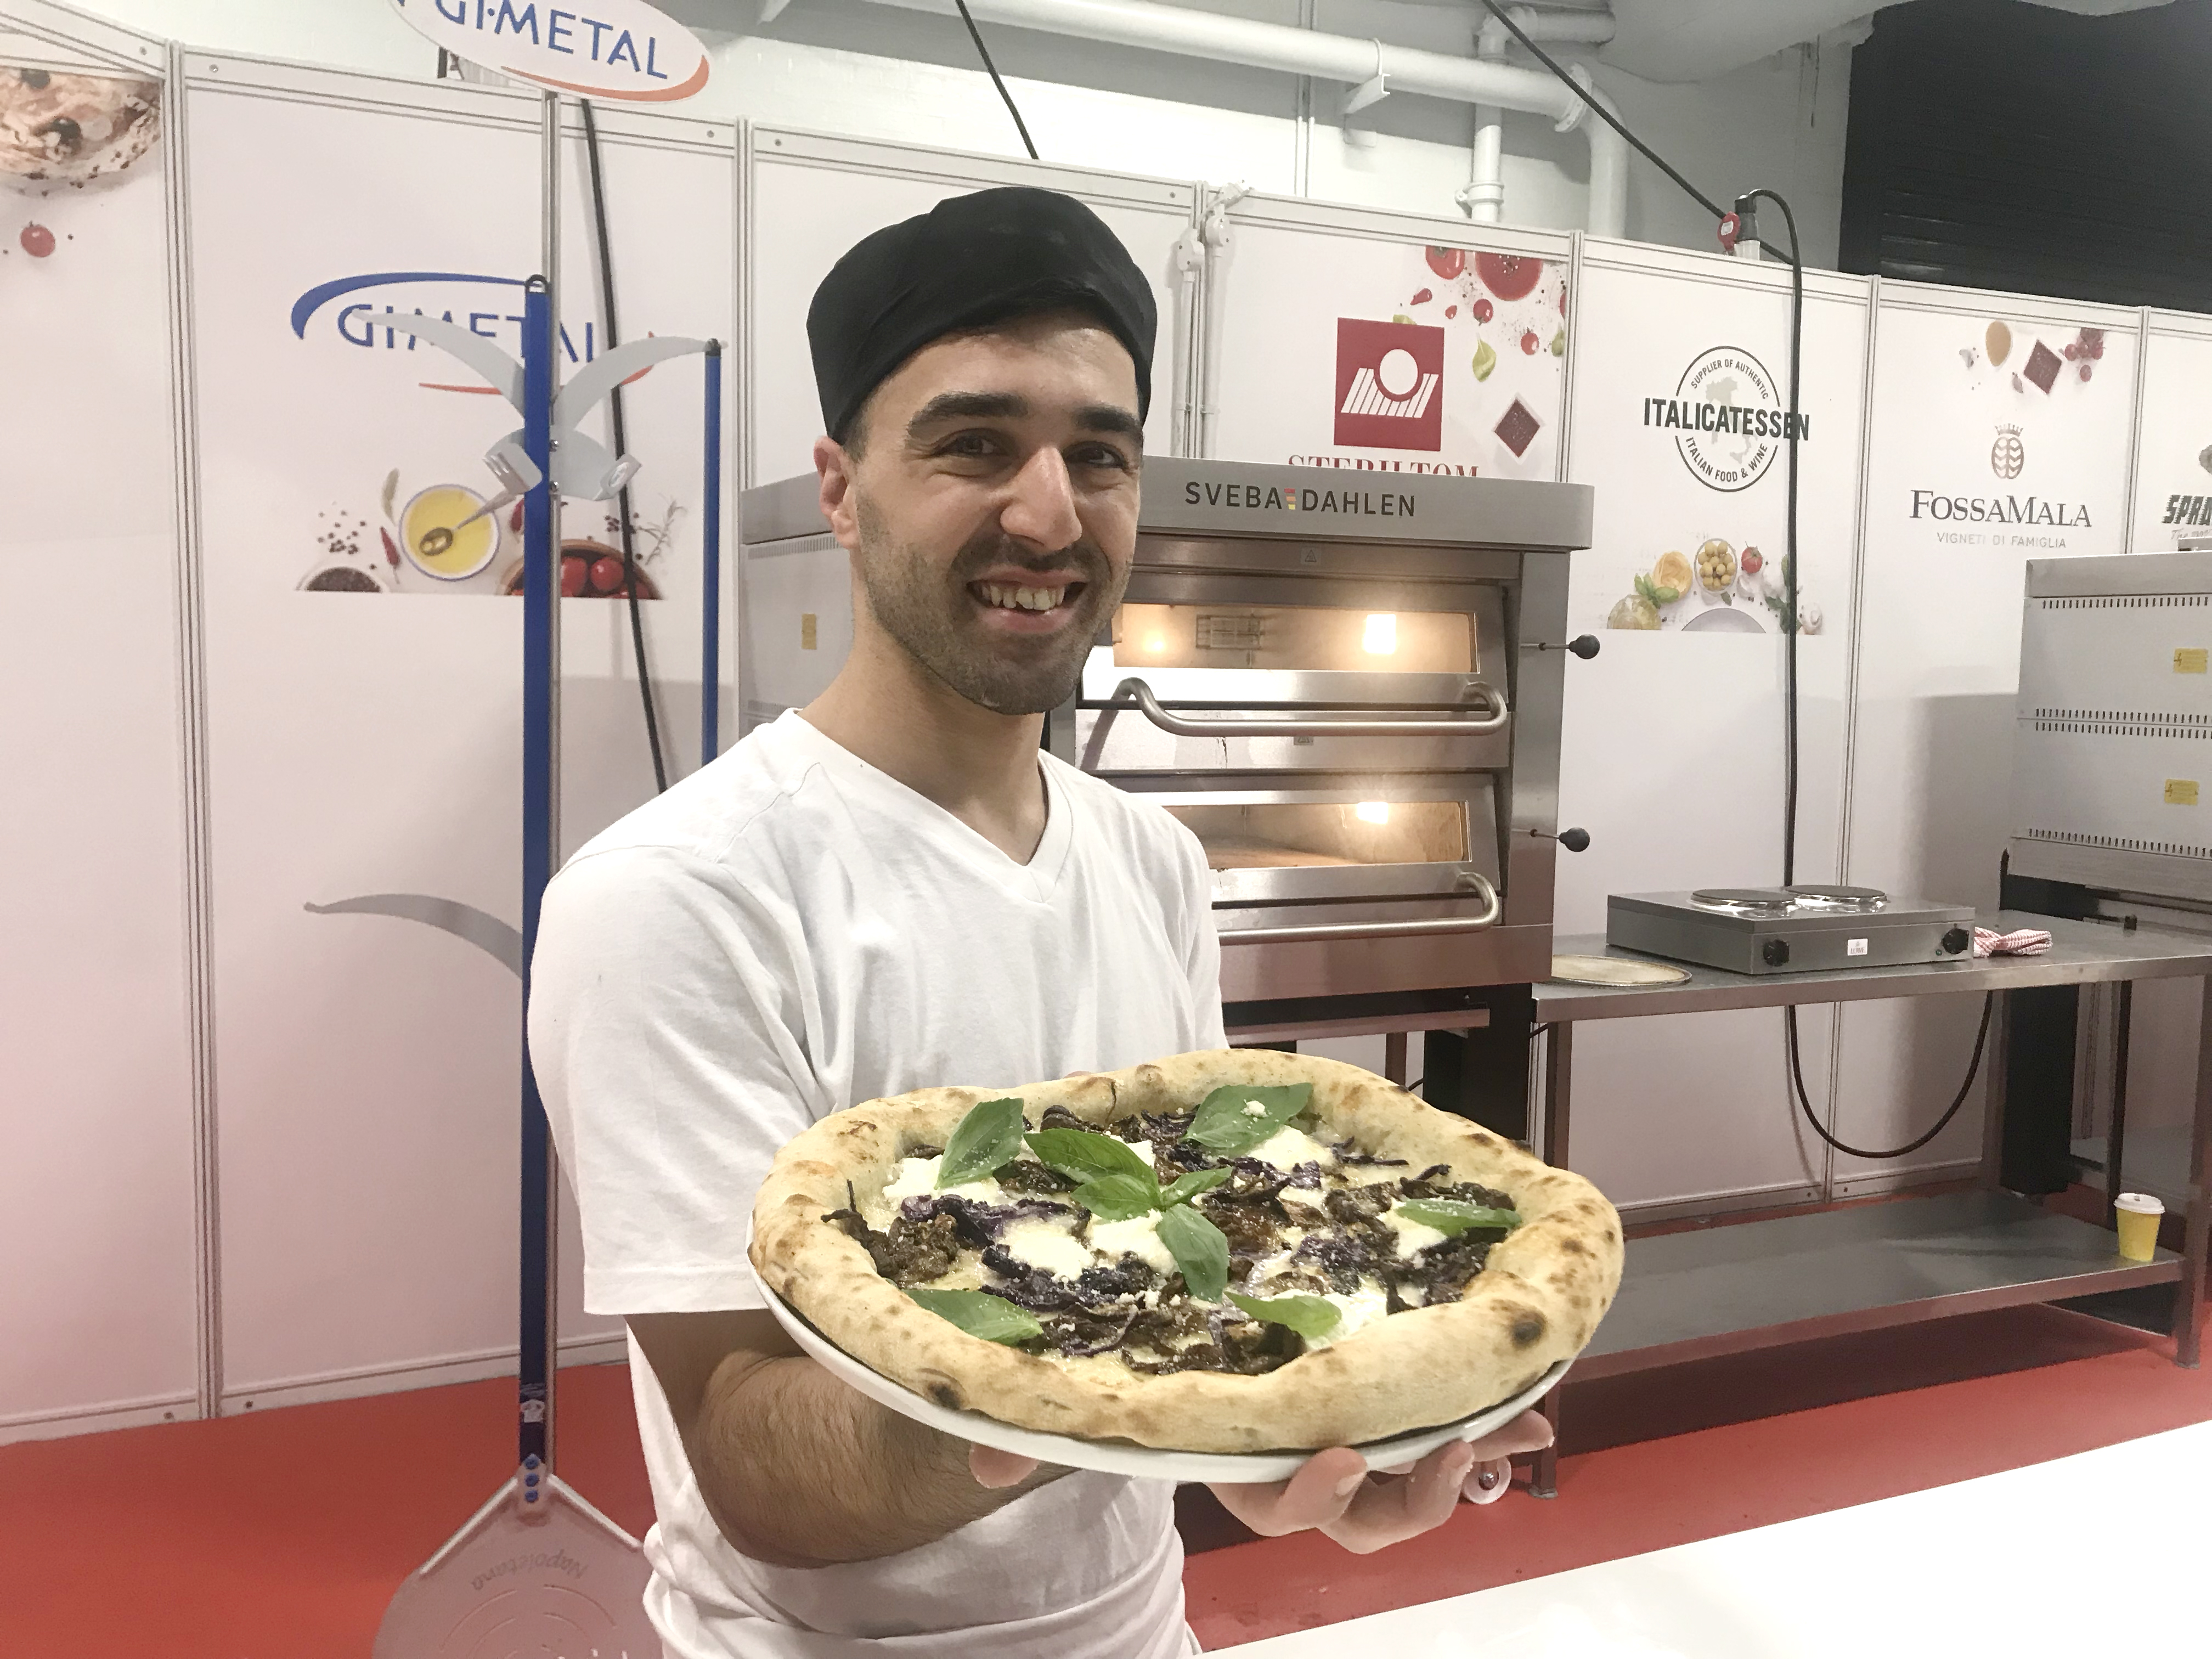 Pizza Senza Frontiere 2019